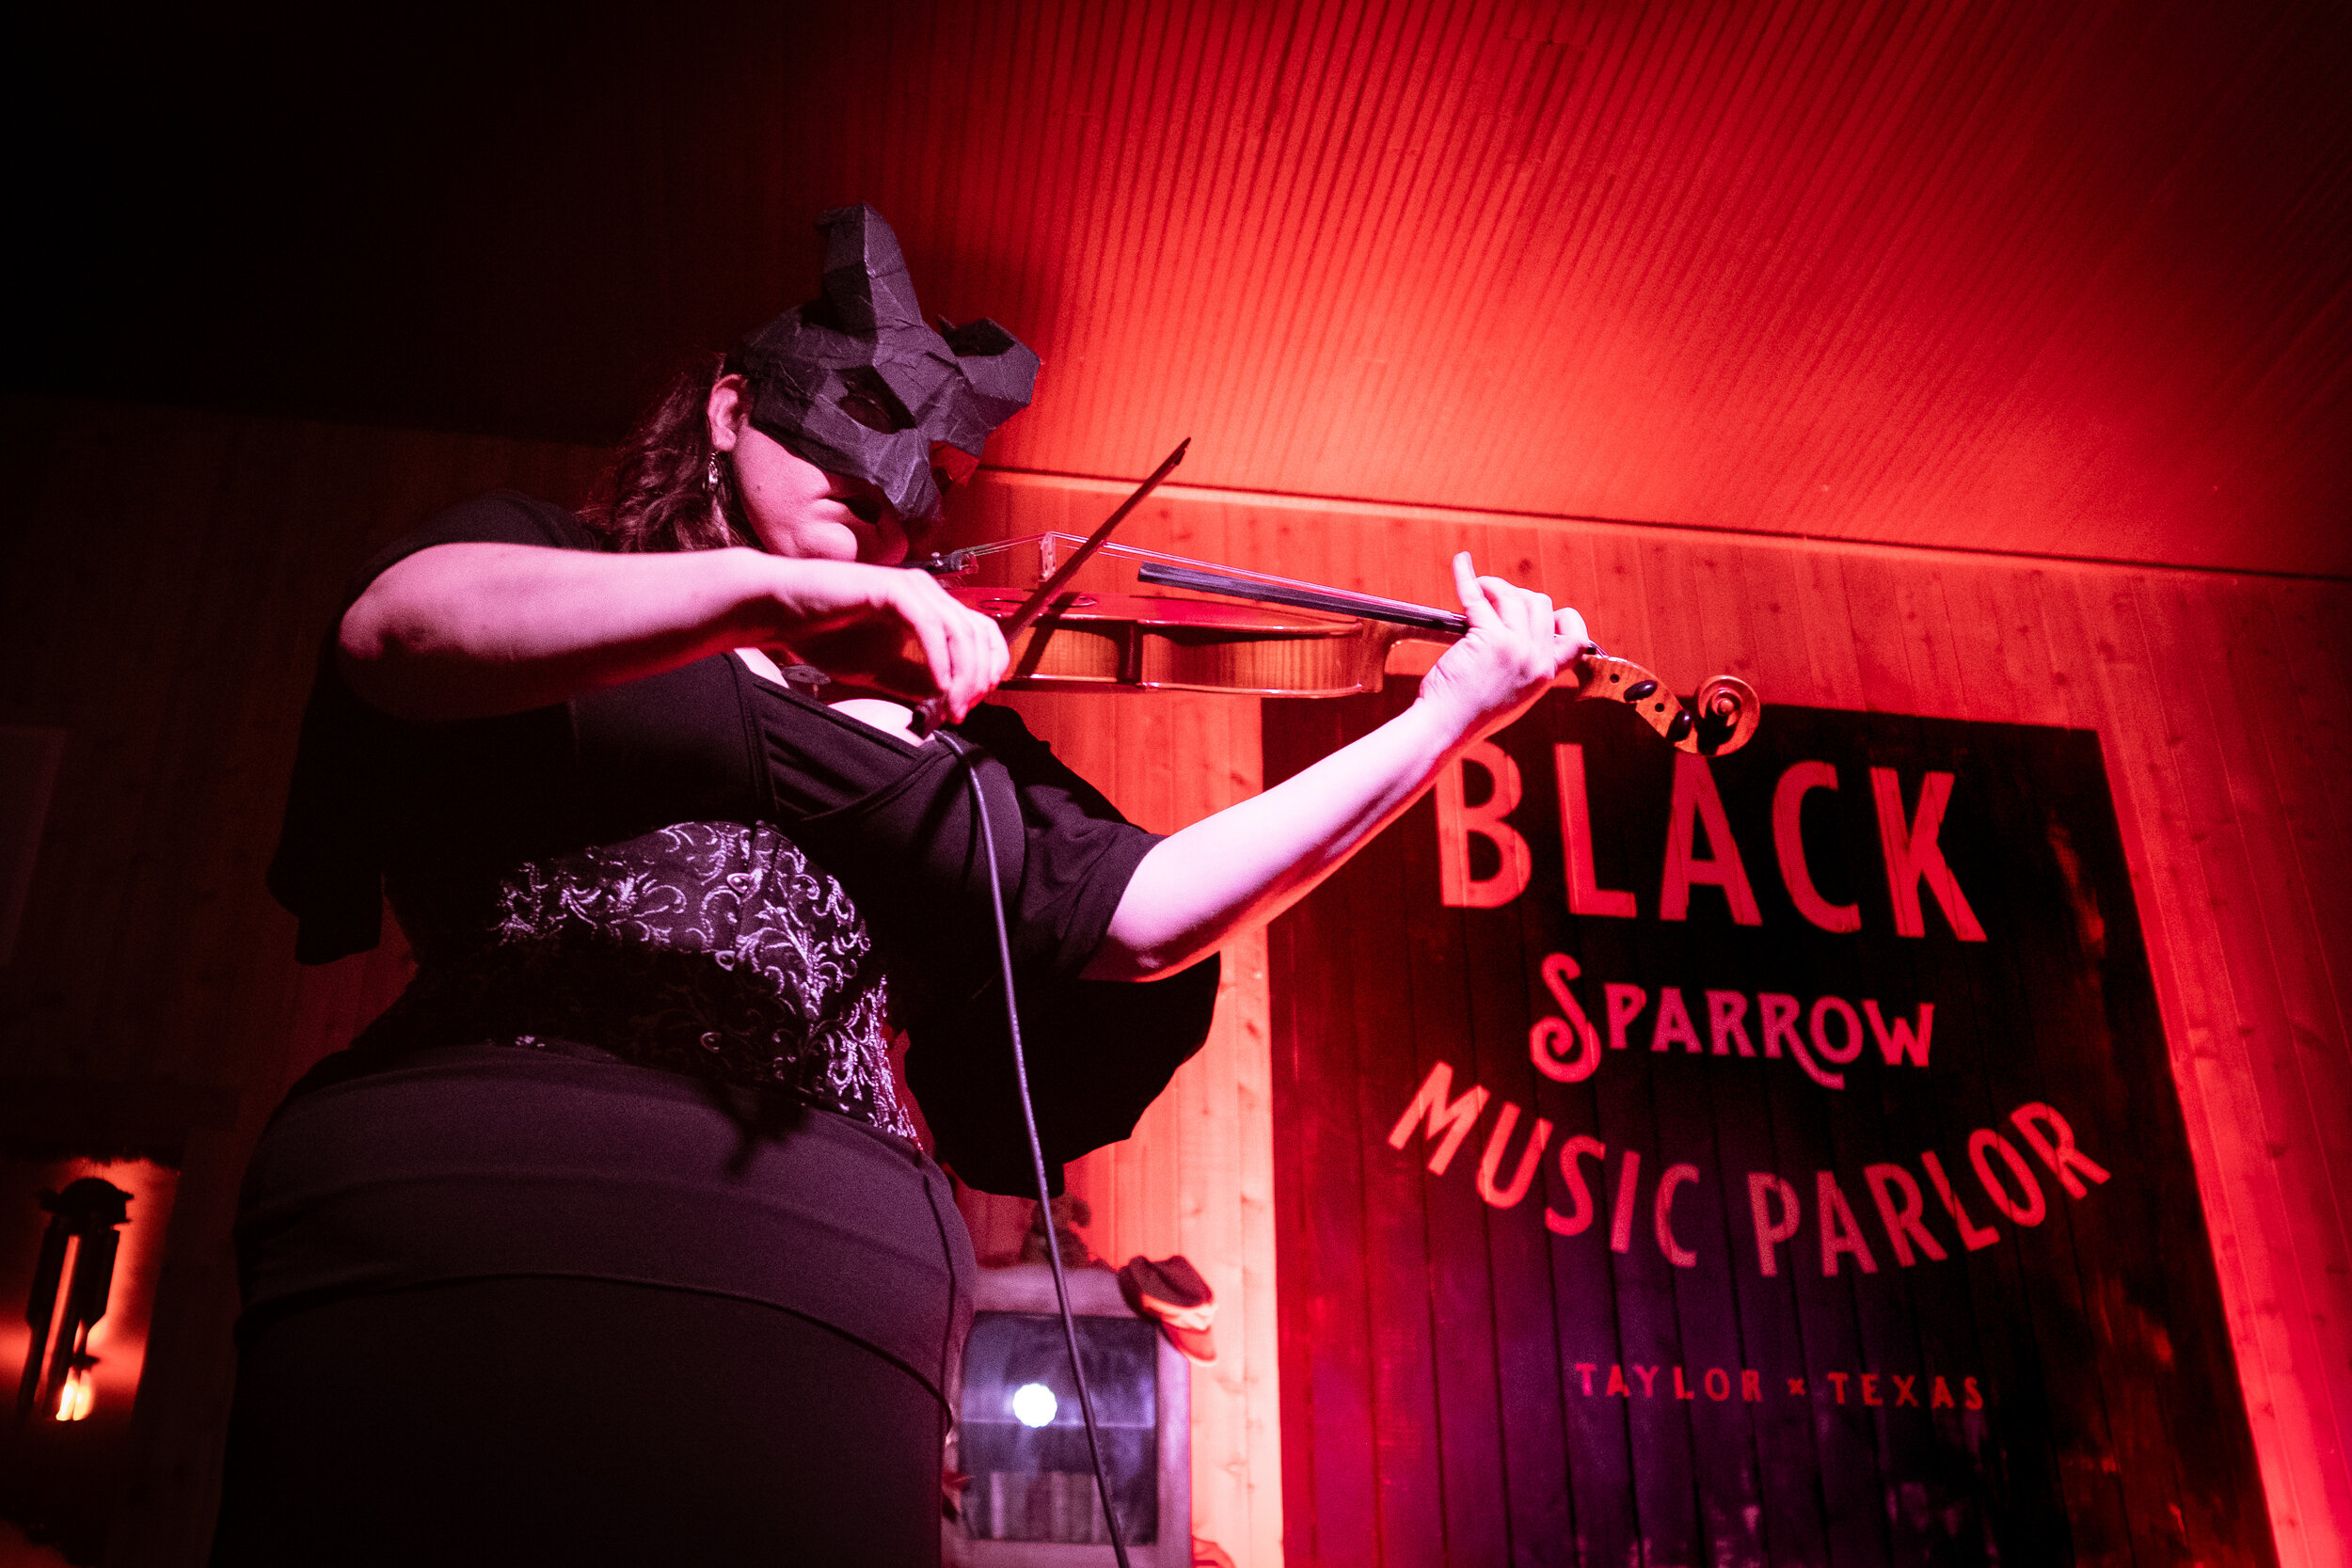 Black Sparrow Music Parlor